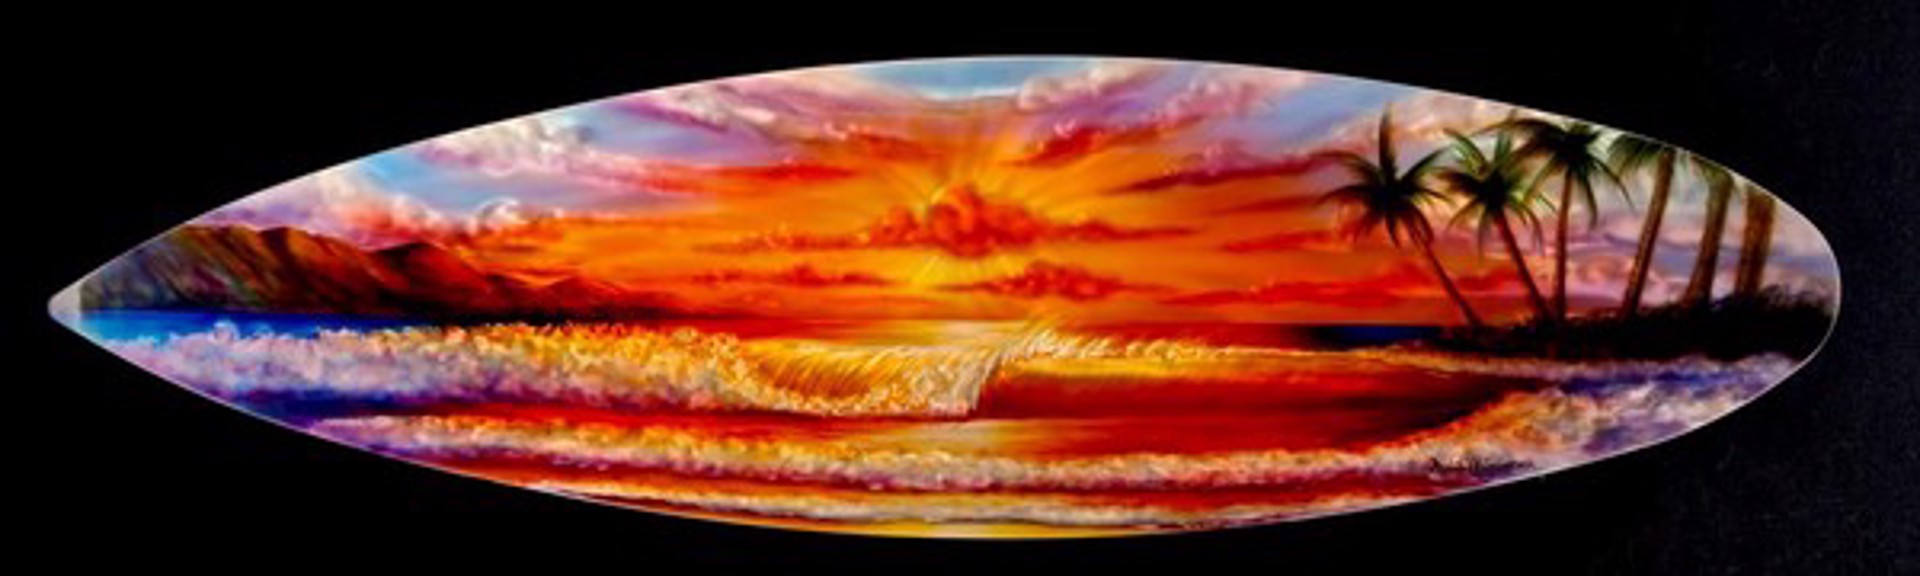 Sunset Surfboard #31 by Dennis Mathewson